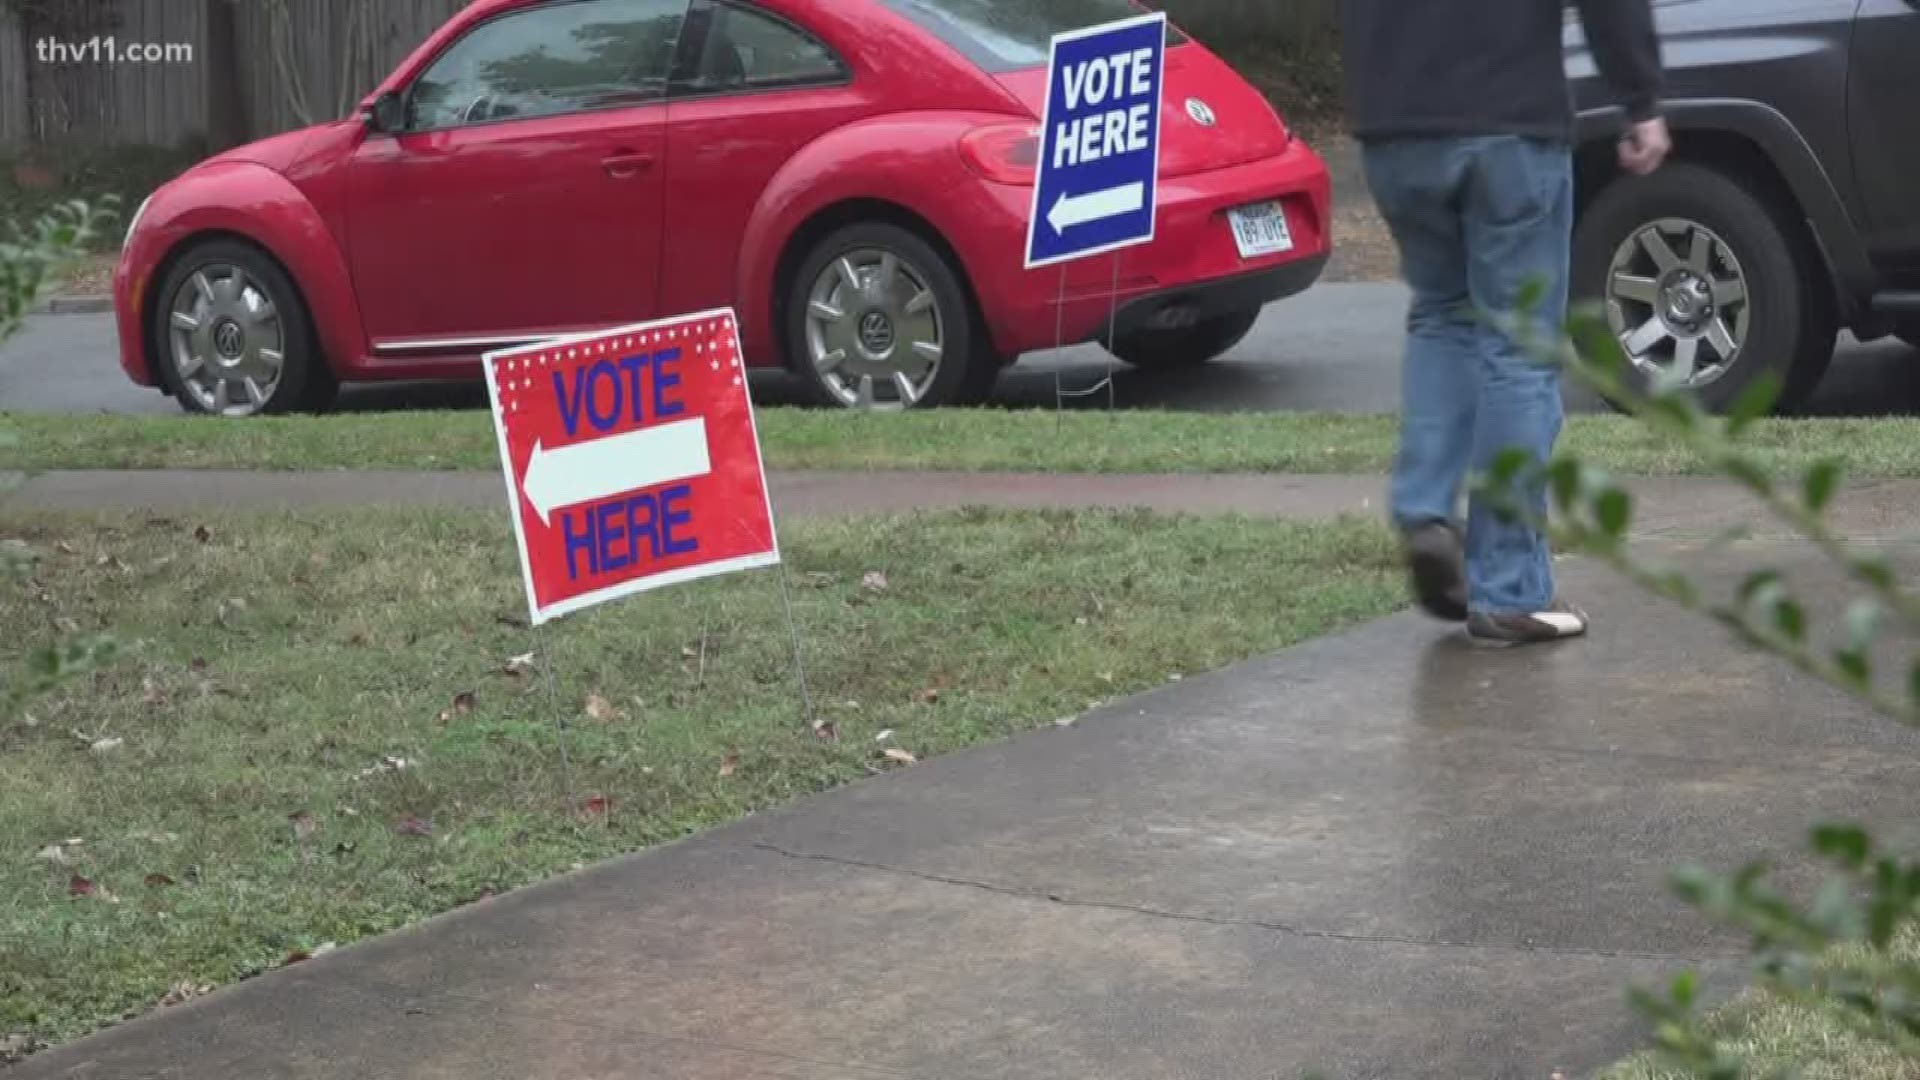 Lance Turner previews Arkansas's May primaries